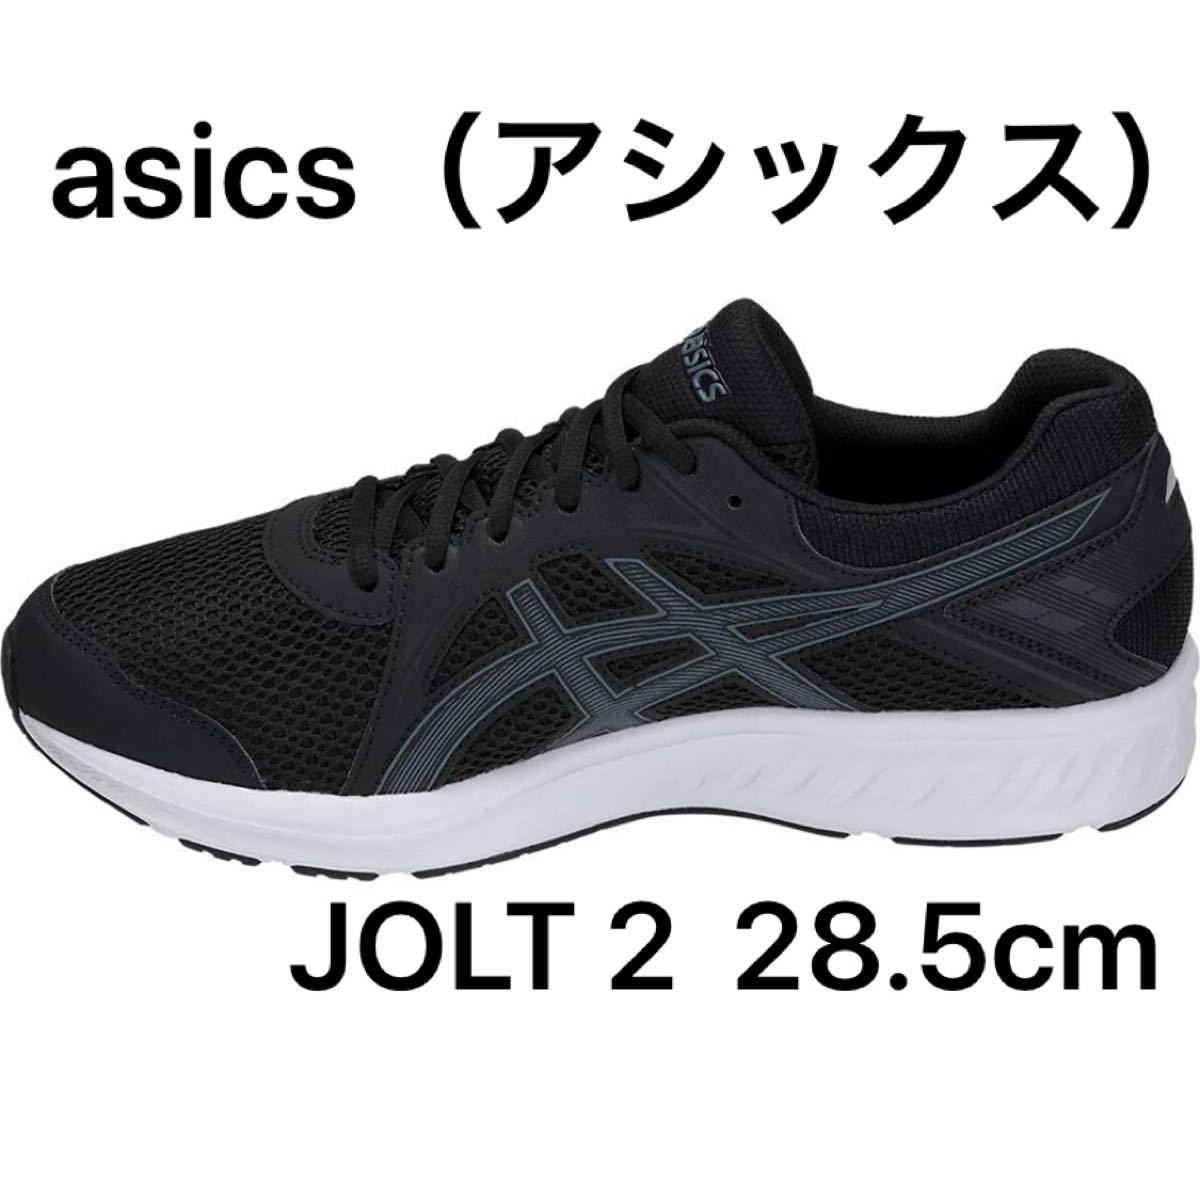 asics（アシックス）JOLT 2  28.5cm ランニングシューズ